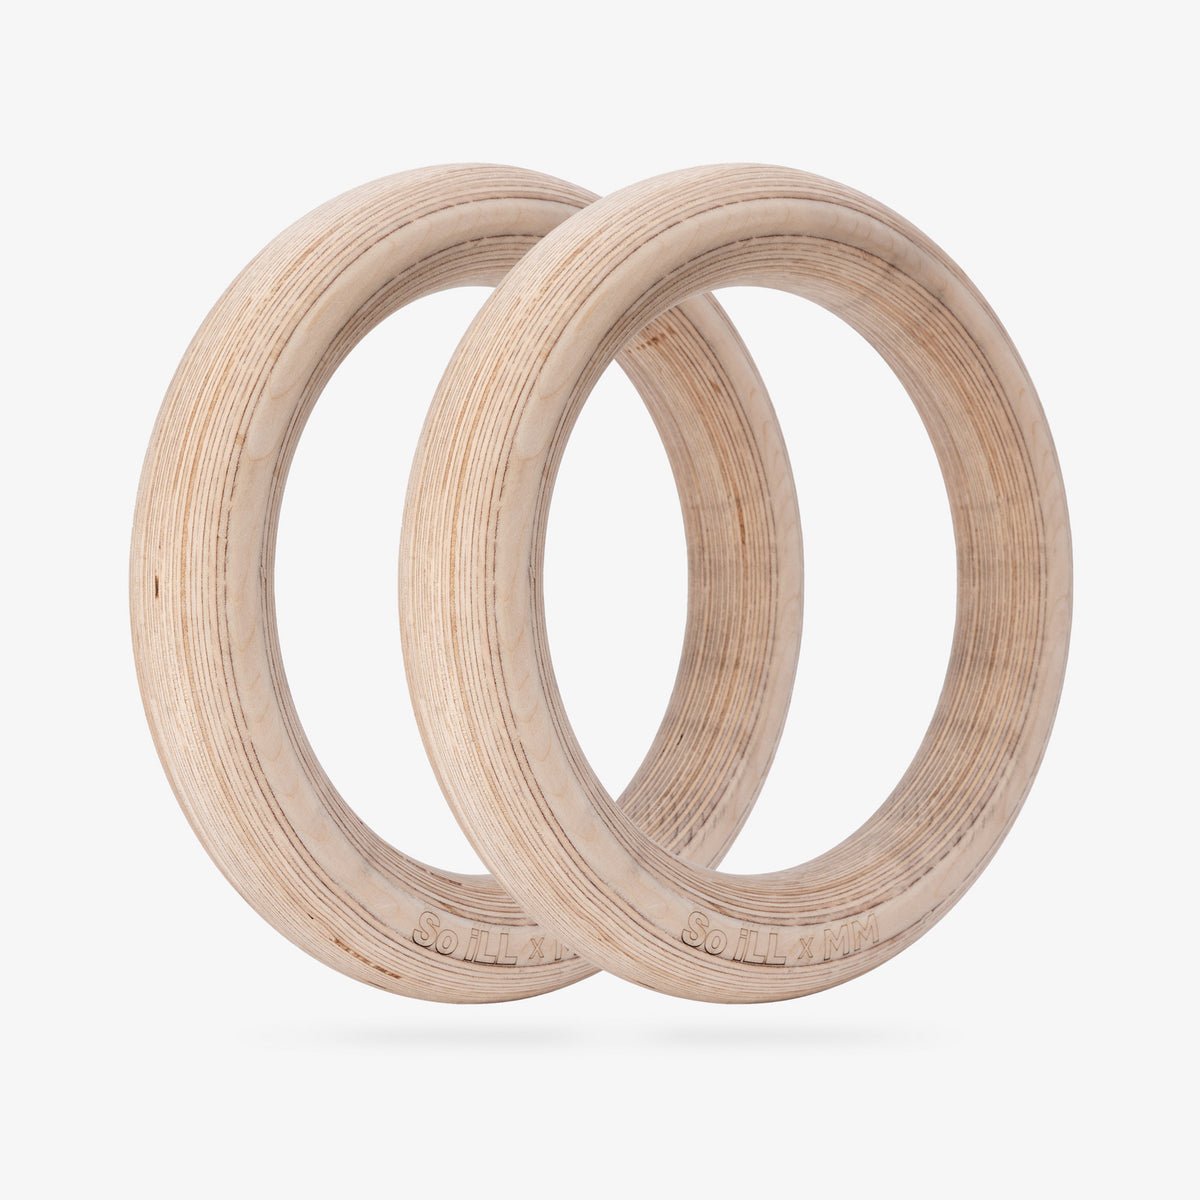 Mega Wooden Rings • So iLL X Meagan Martin X 360 Holds